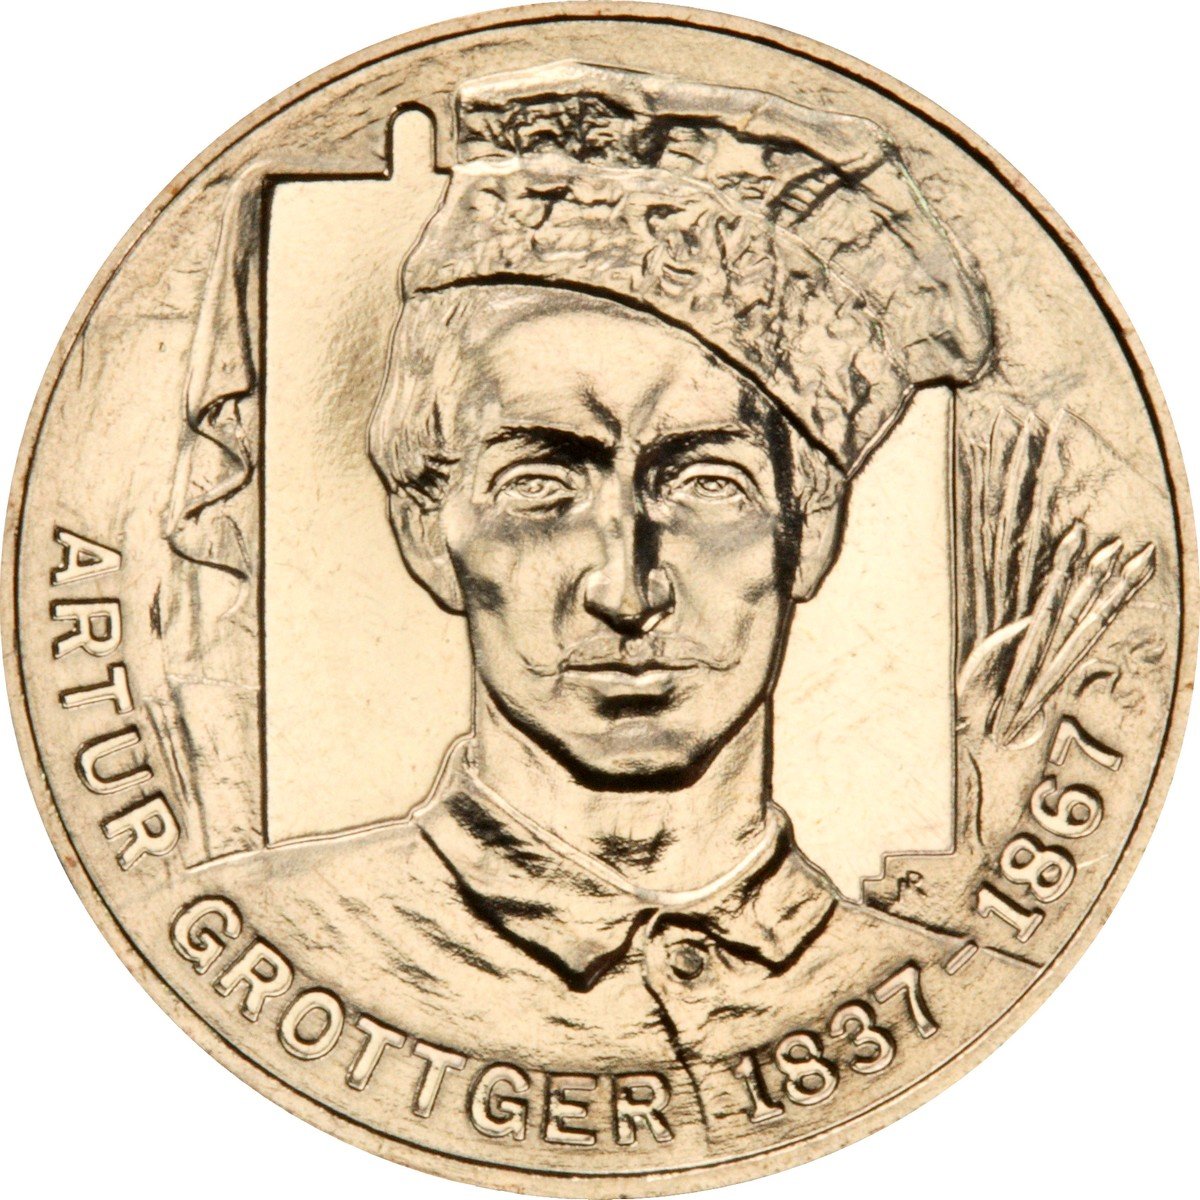 2zl-artur-grottger-1837-1867-rewers-monety